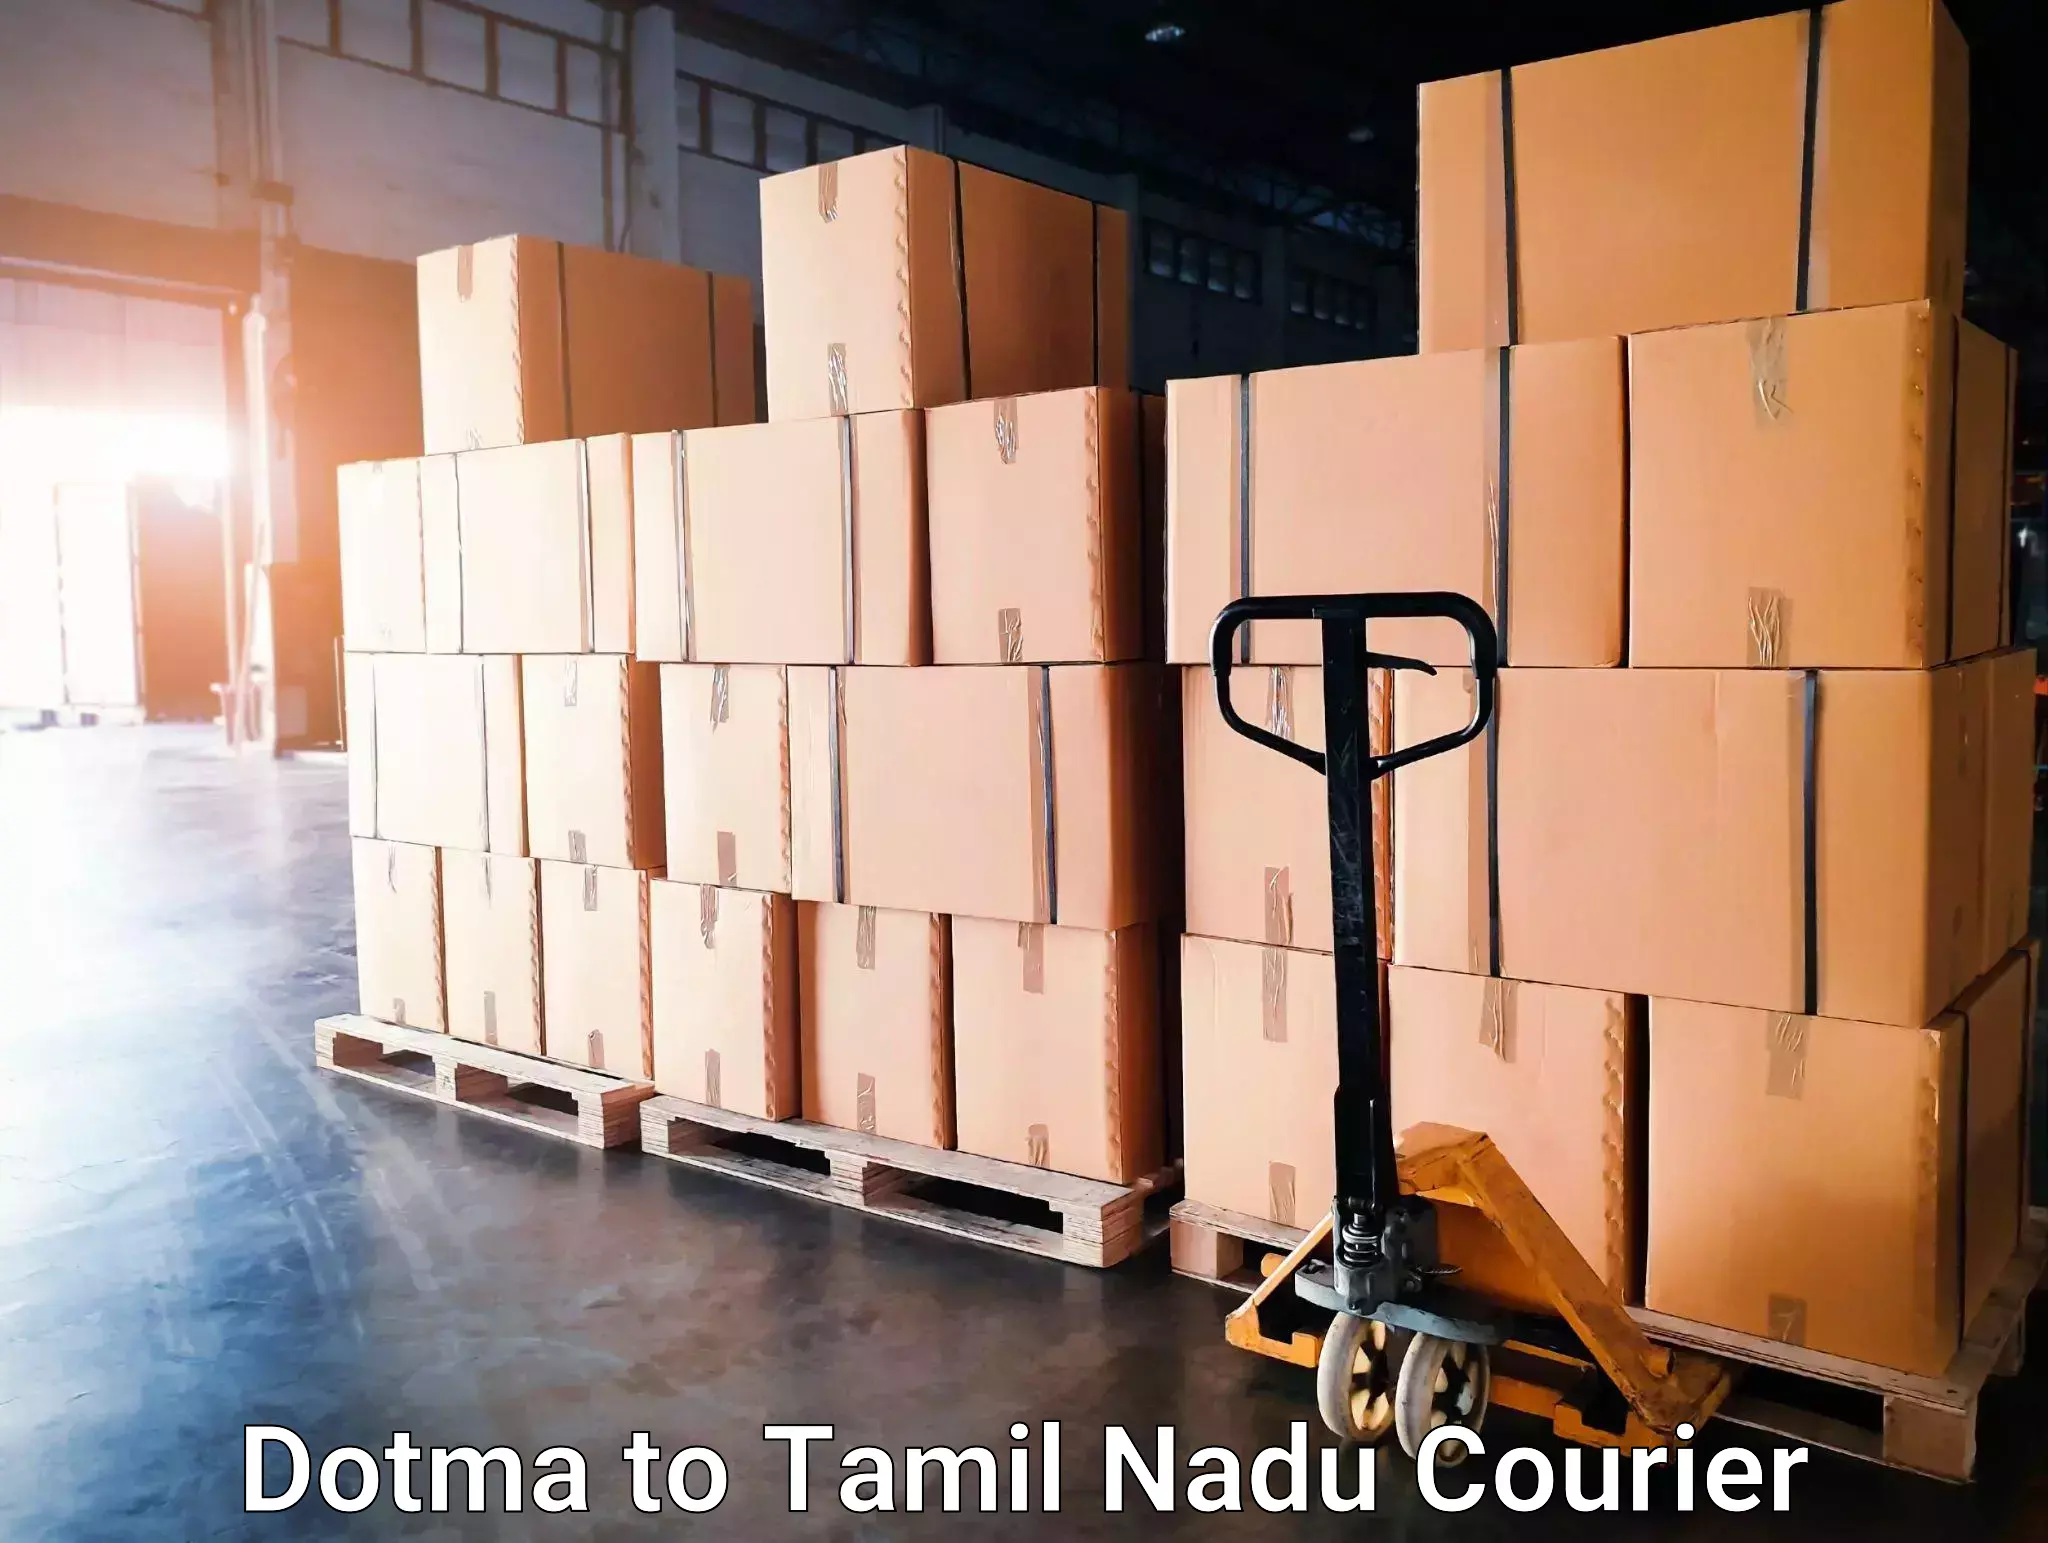 International courier networks Dotma to Tamil Nadu